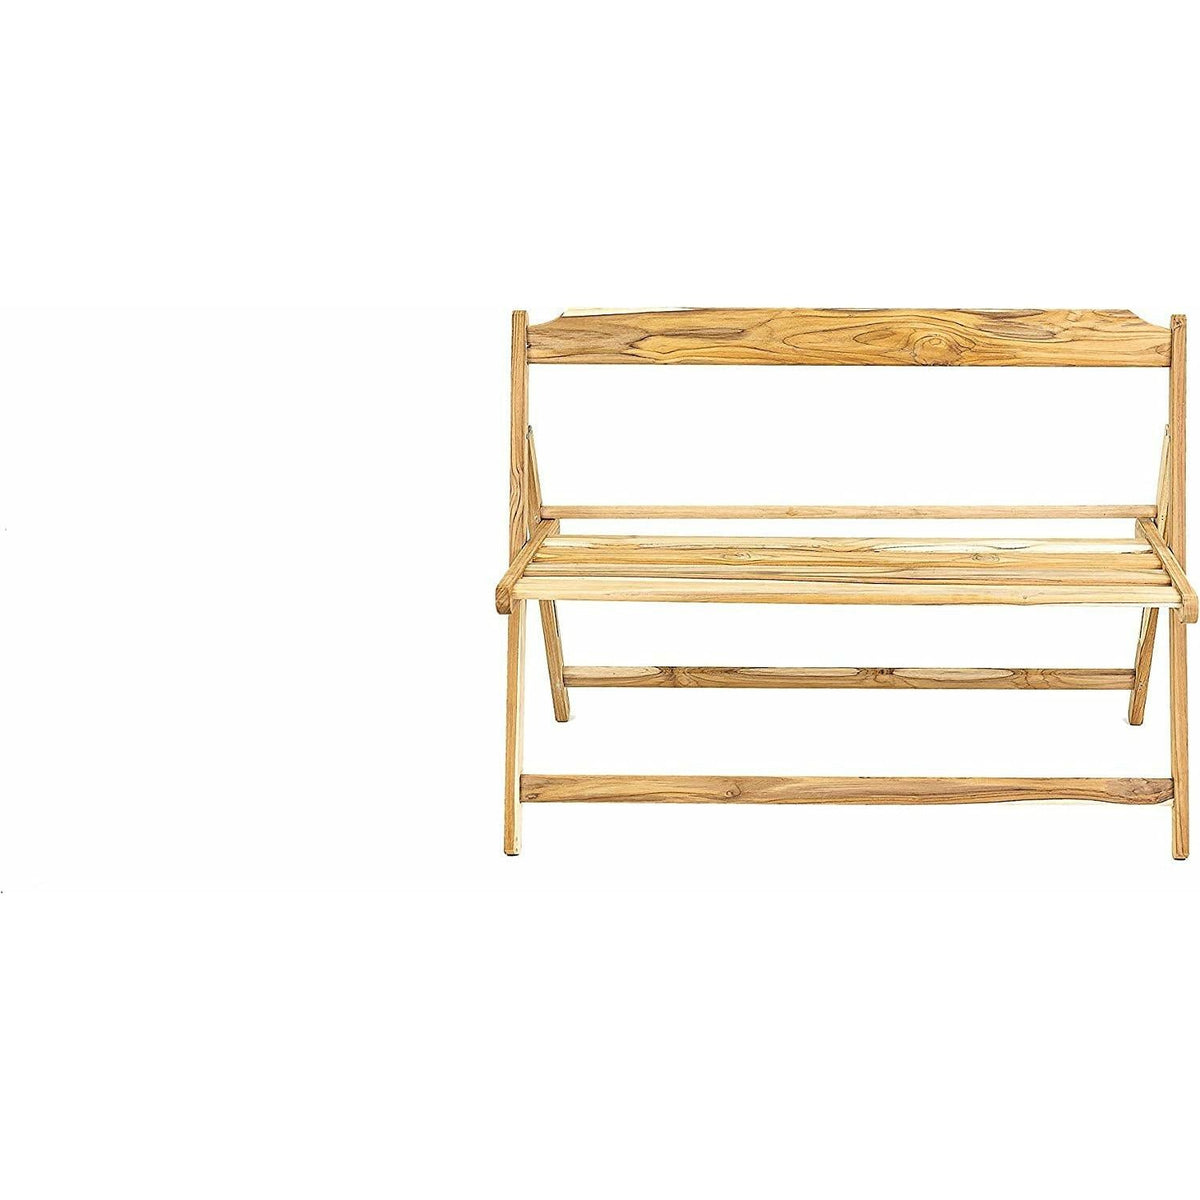 Tramontina 2/3 Seater Teak Wood Foldable Beer Bench - Tan | 13926/052 (7558493798588)